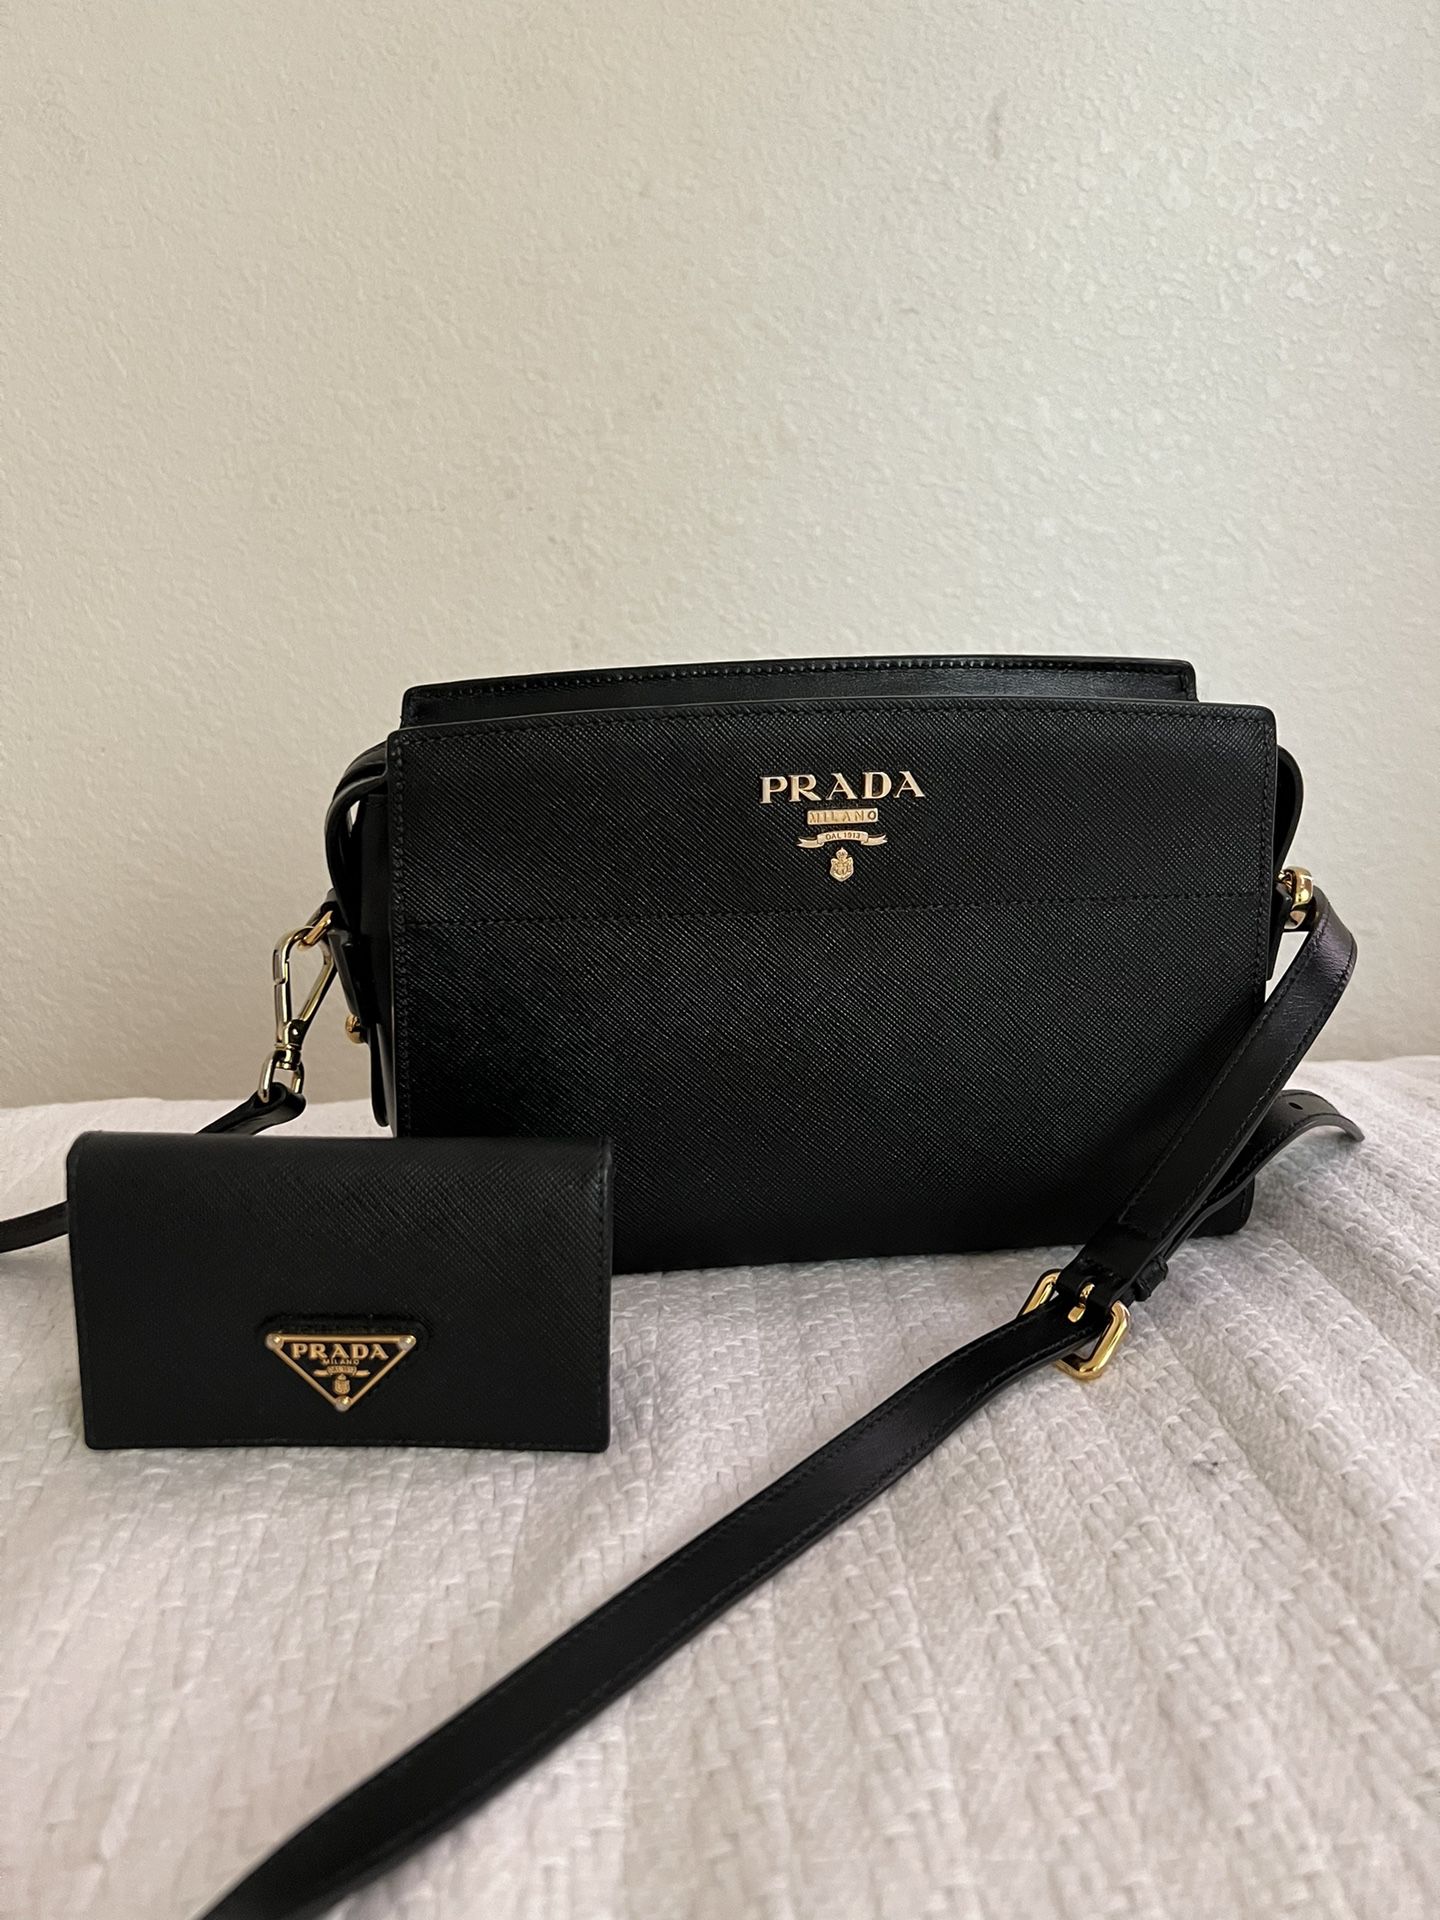 prada bag with coin purse